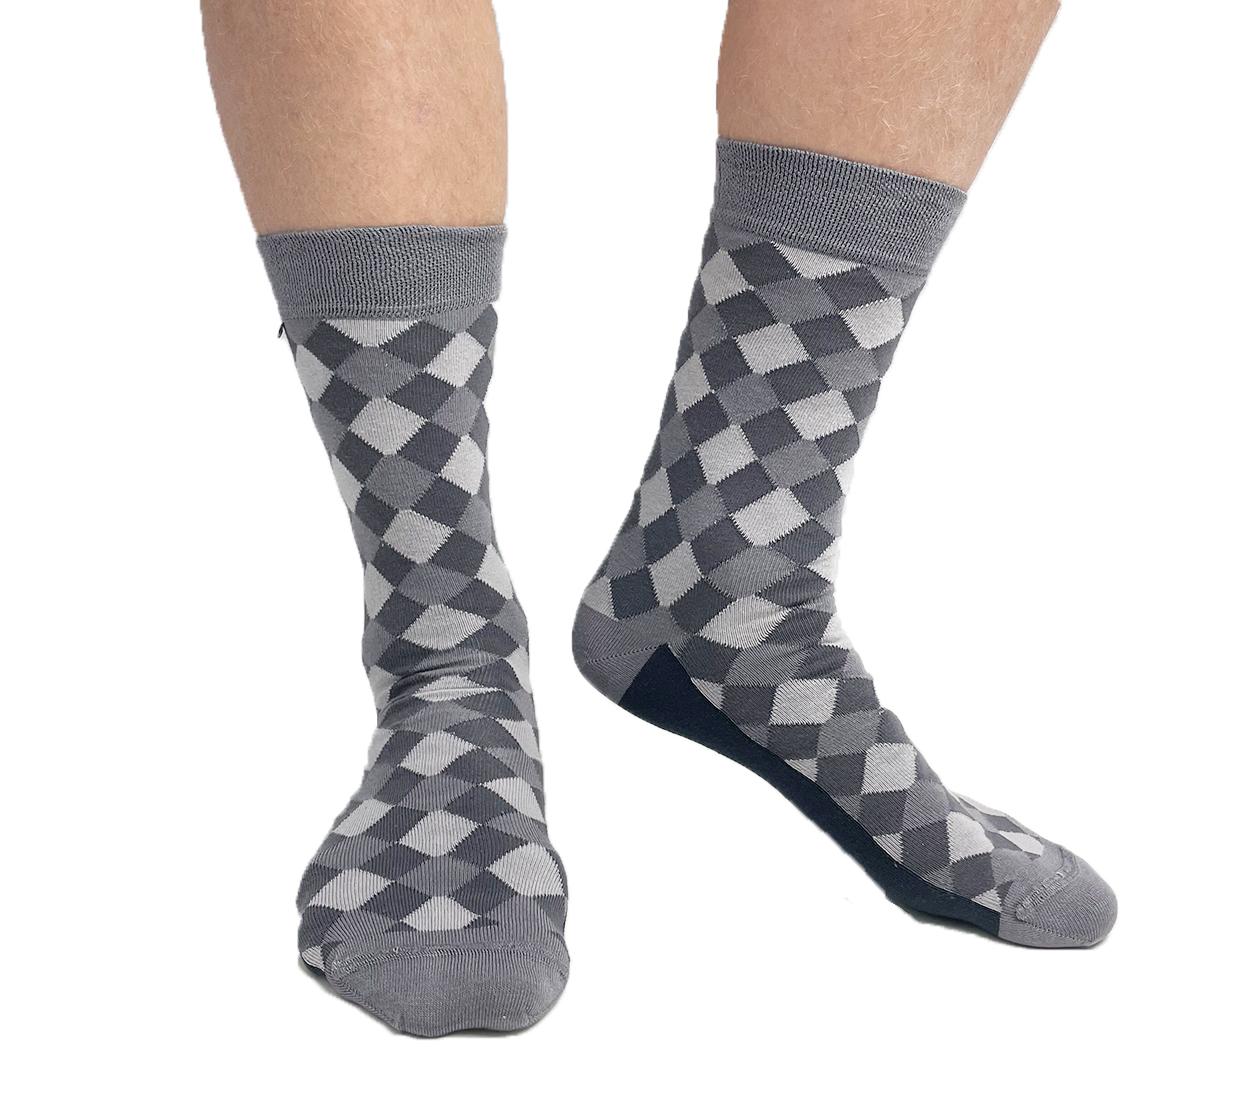 Checkered grey socks